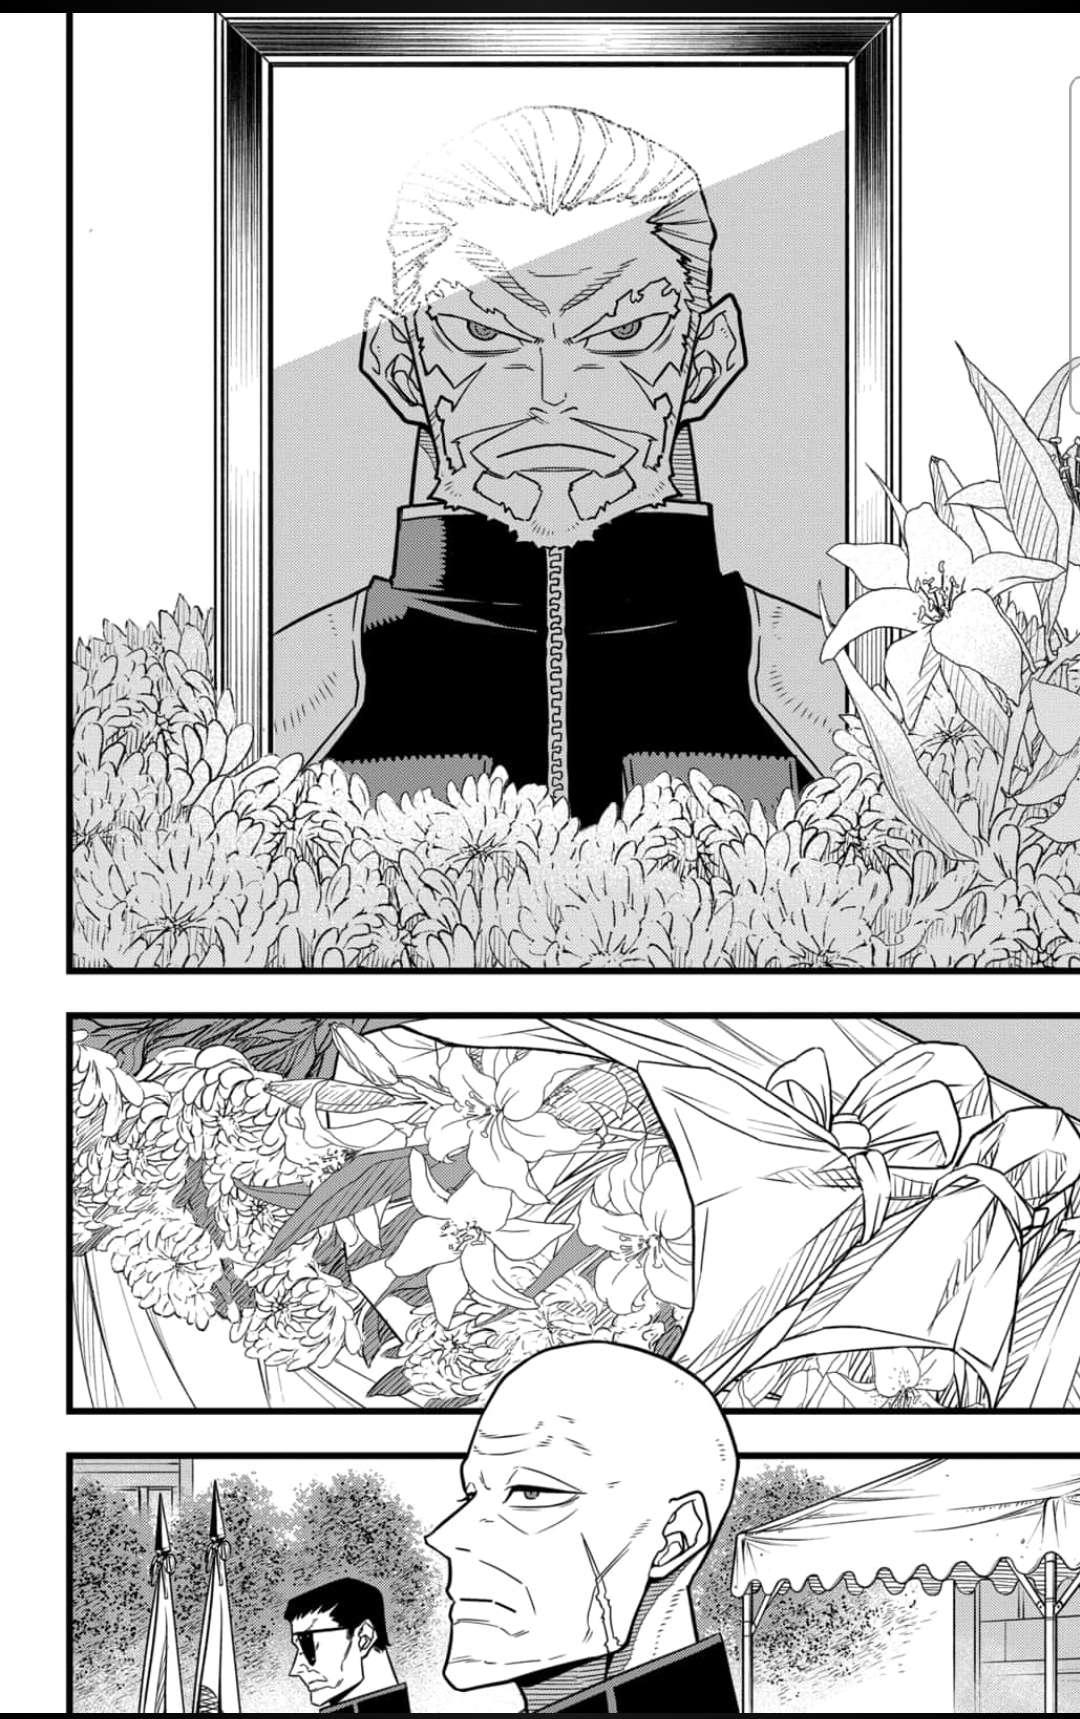 Kaiju No. 8 Chapter 54 page 7 - Mangakakalot